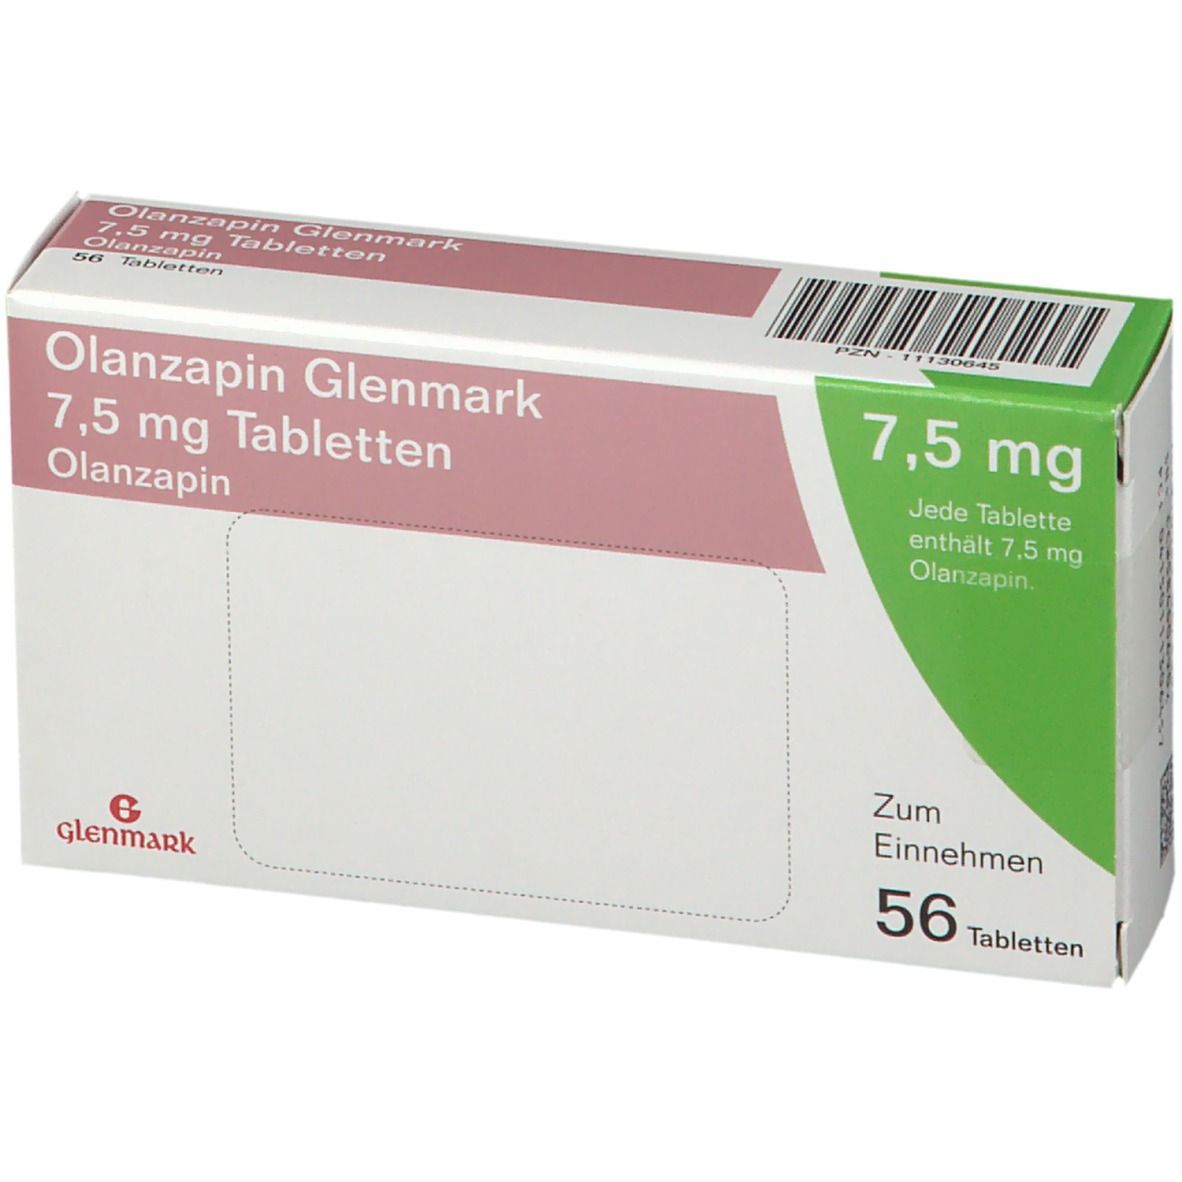 Olanzapin Glenmark 7,5 mg